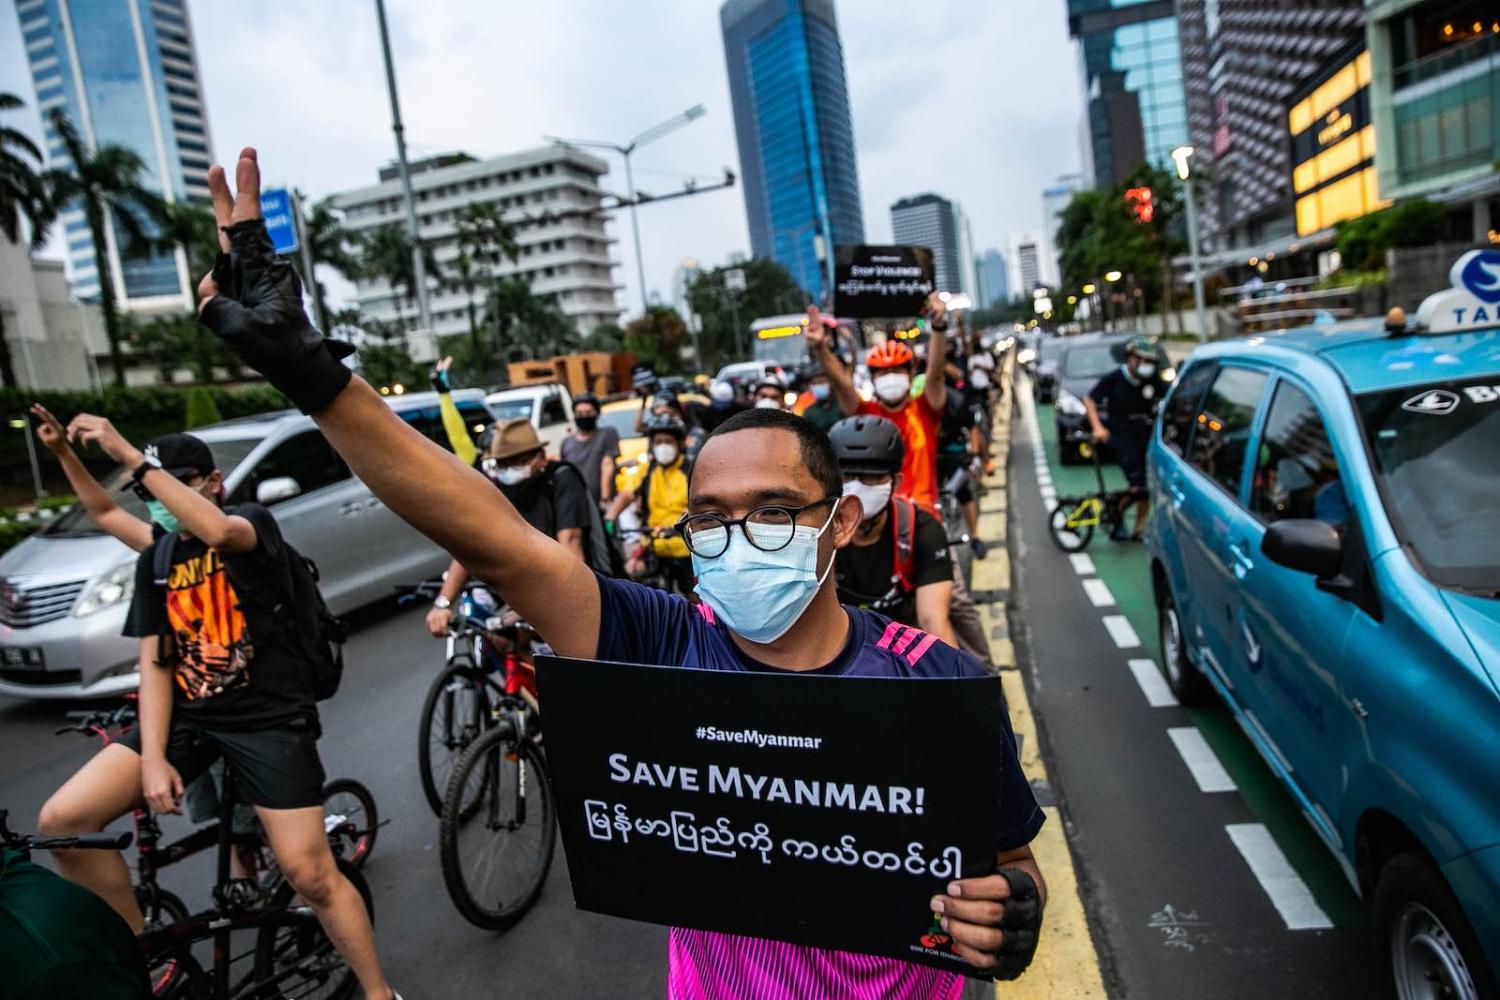 Indonesian bikers protest against the Myanmar military coup, outside the ASEAN secretariat building in Jakarta, 17 April 2021 (Jepayona Delita/Jefta Images/Barcroft Media via Getty Images)